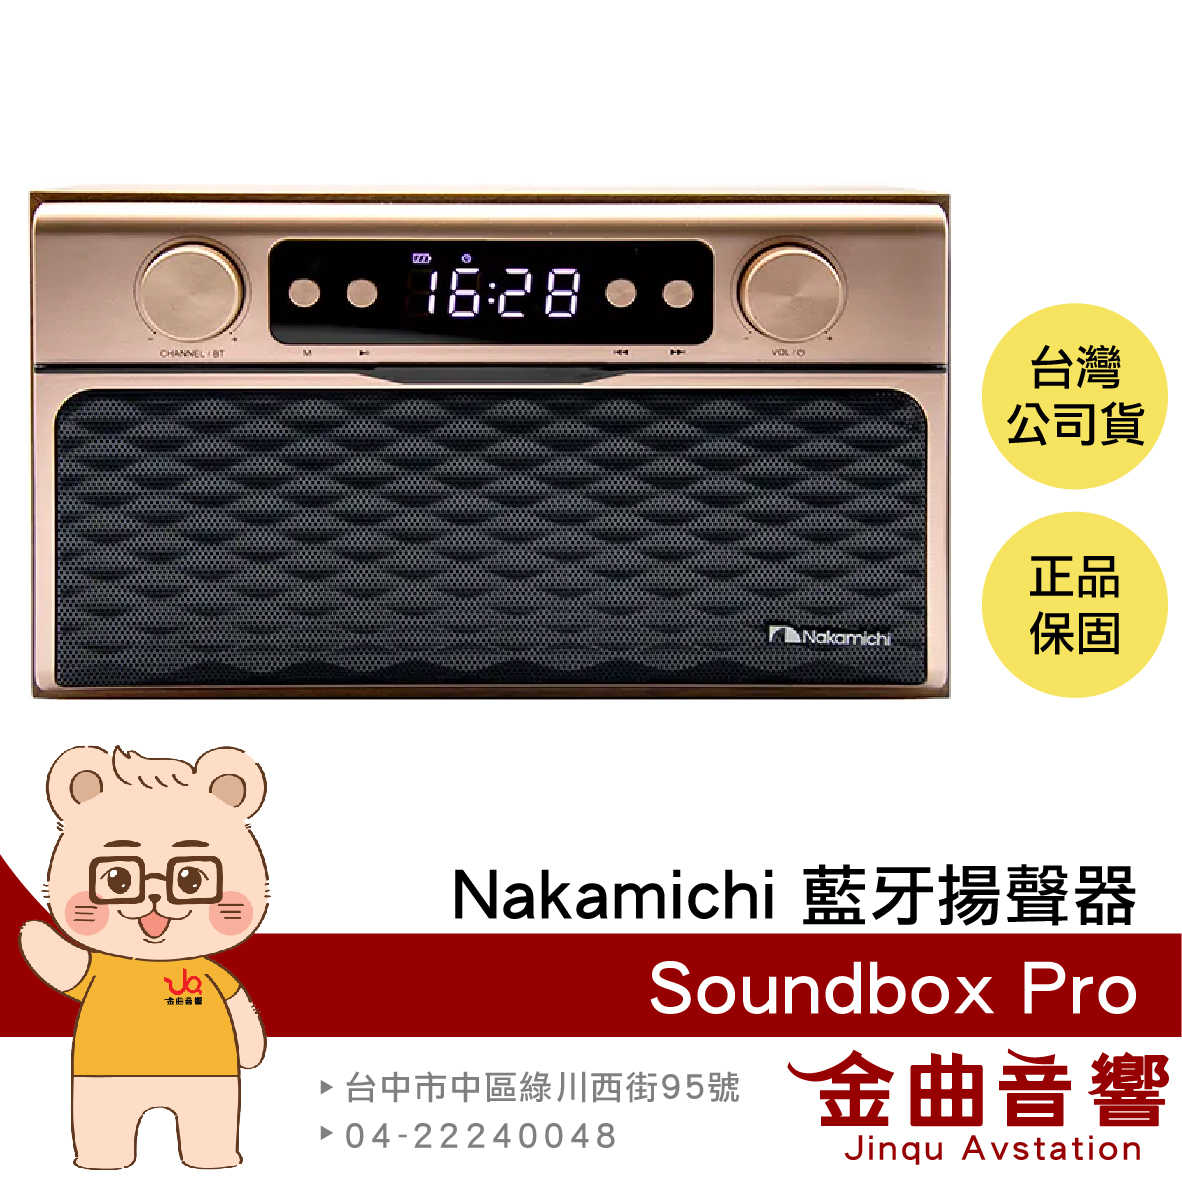 Nakamichi Soundbox Pro 藍牙5.0 收音機 LED顯示屏 復古木質 揚聲器 | 金曲音響